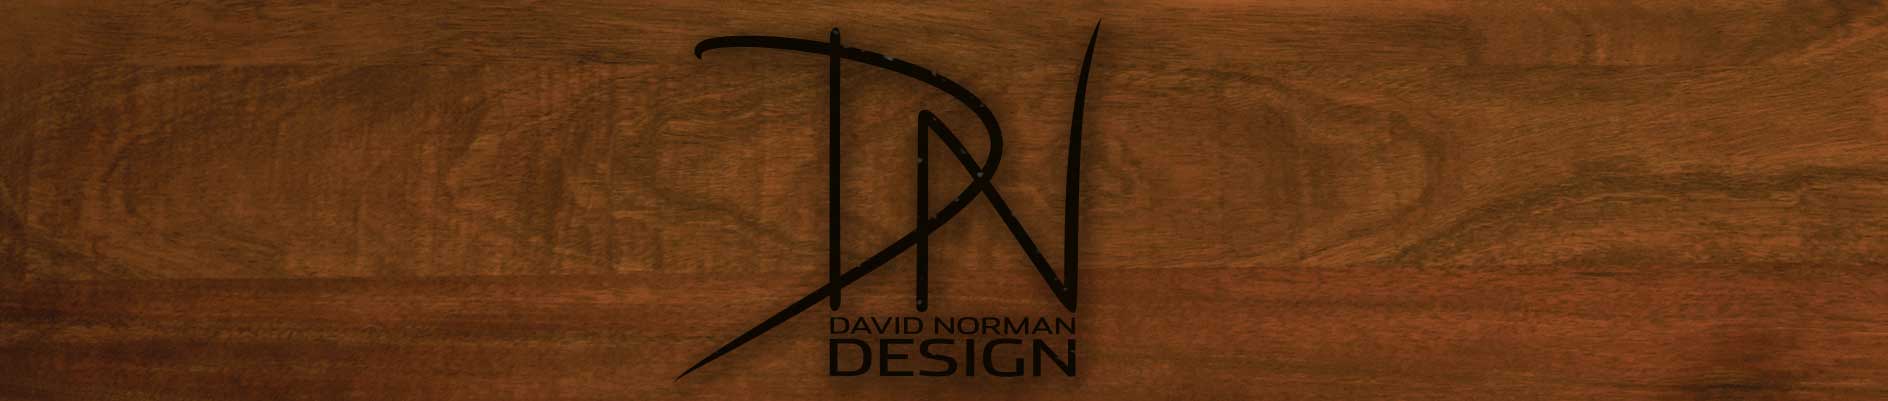 David Norman Fire Branding